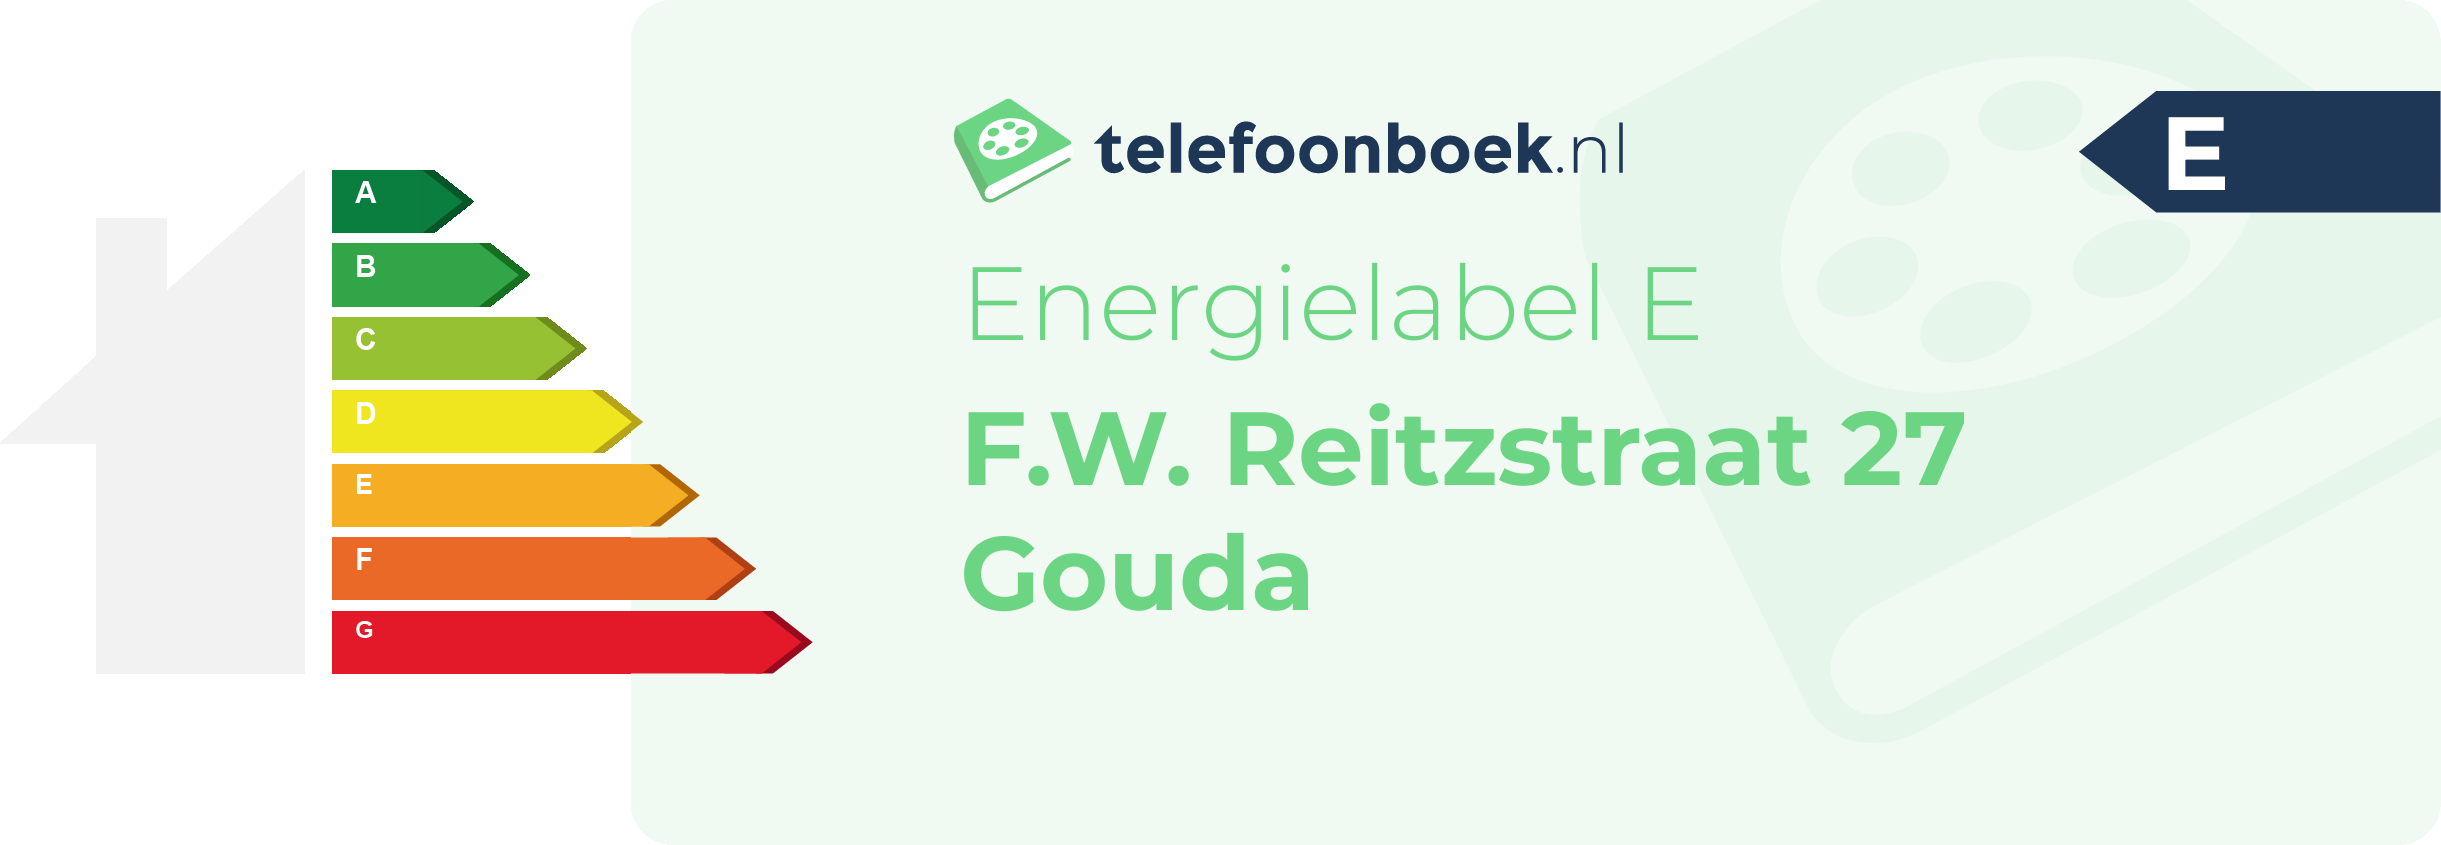 Energielabel F.W. Reitzstraat 27 Gouda